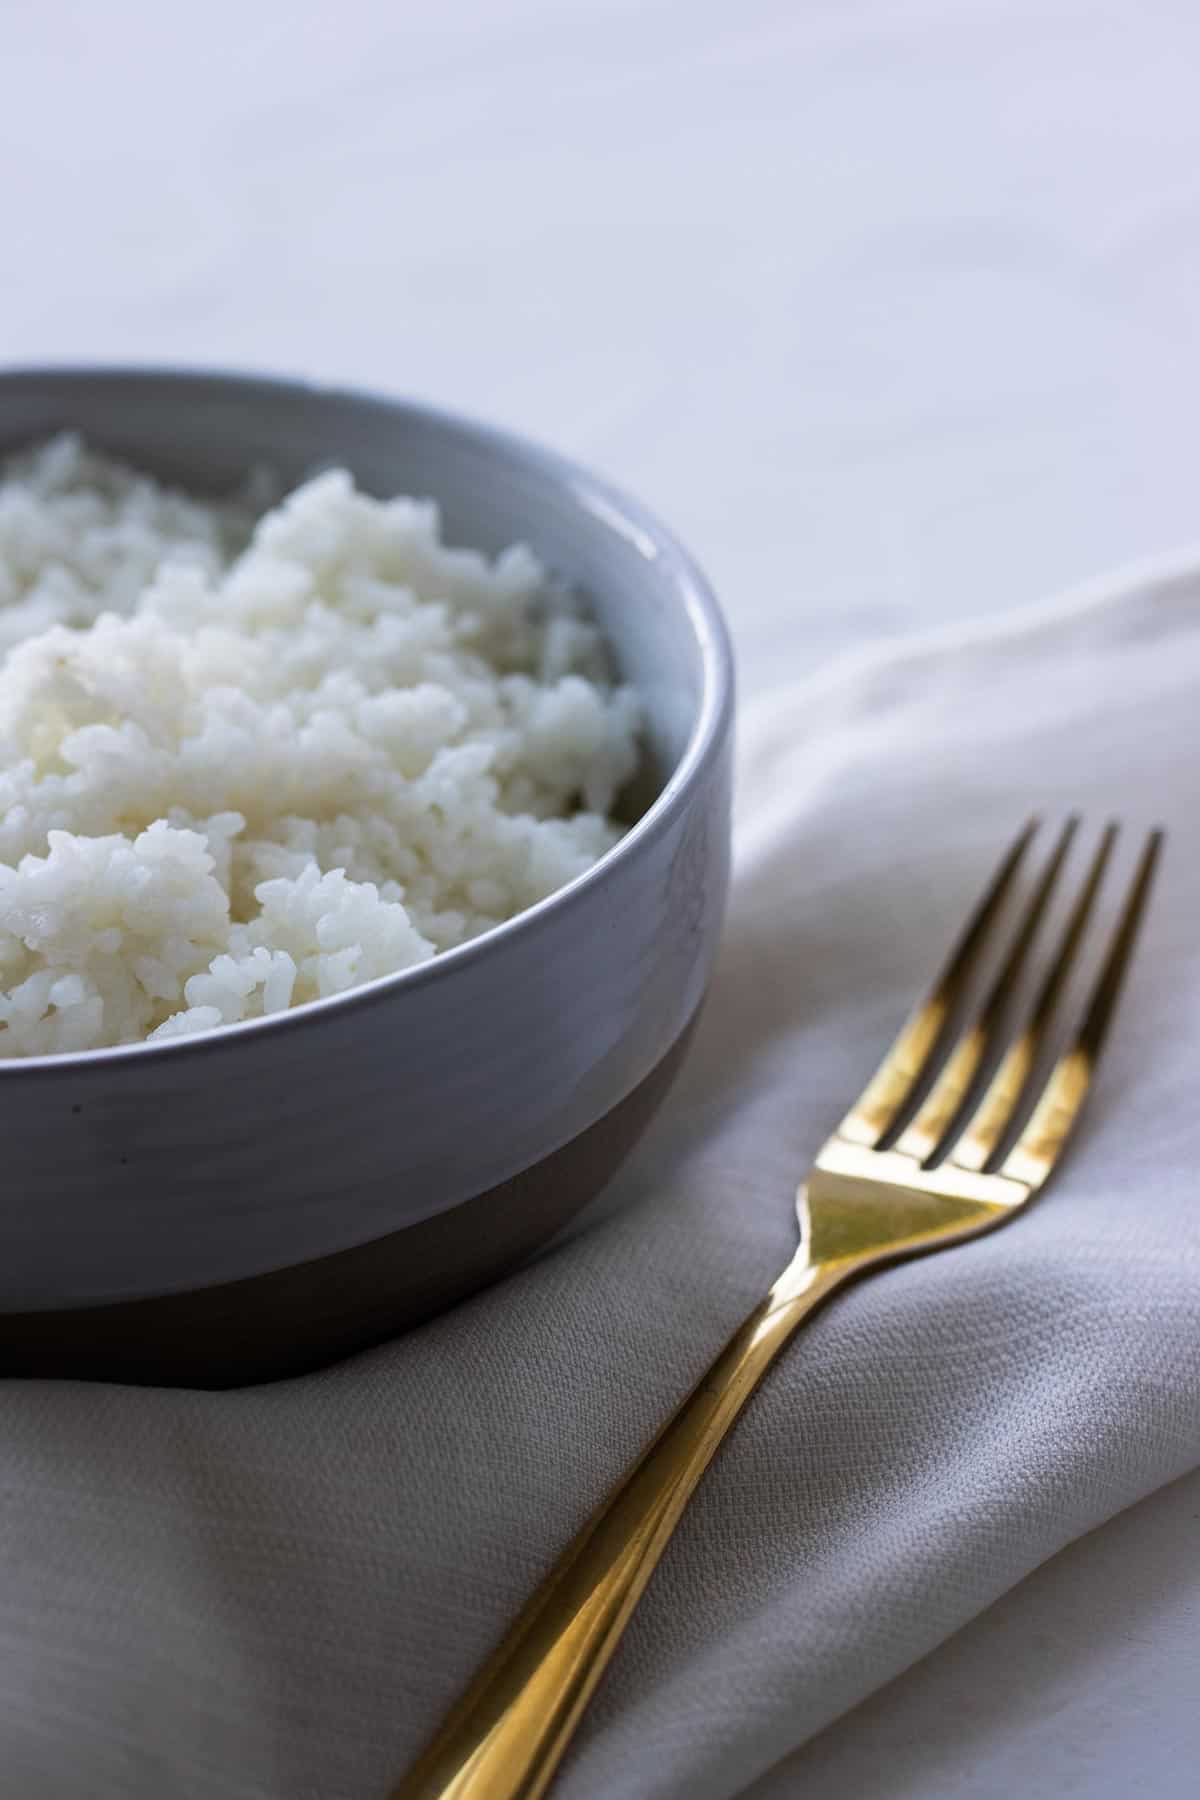 Inaccesible Desgracia Pulido Puerto Rican White Rice - Food Metamorphosis